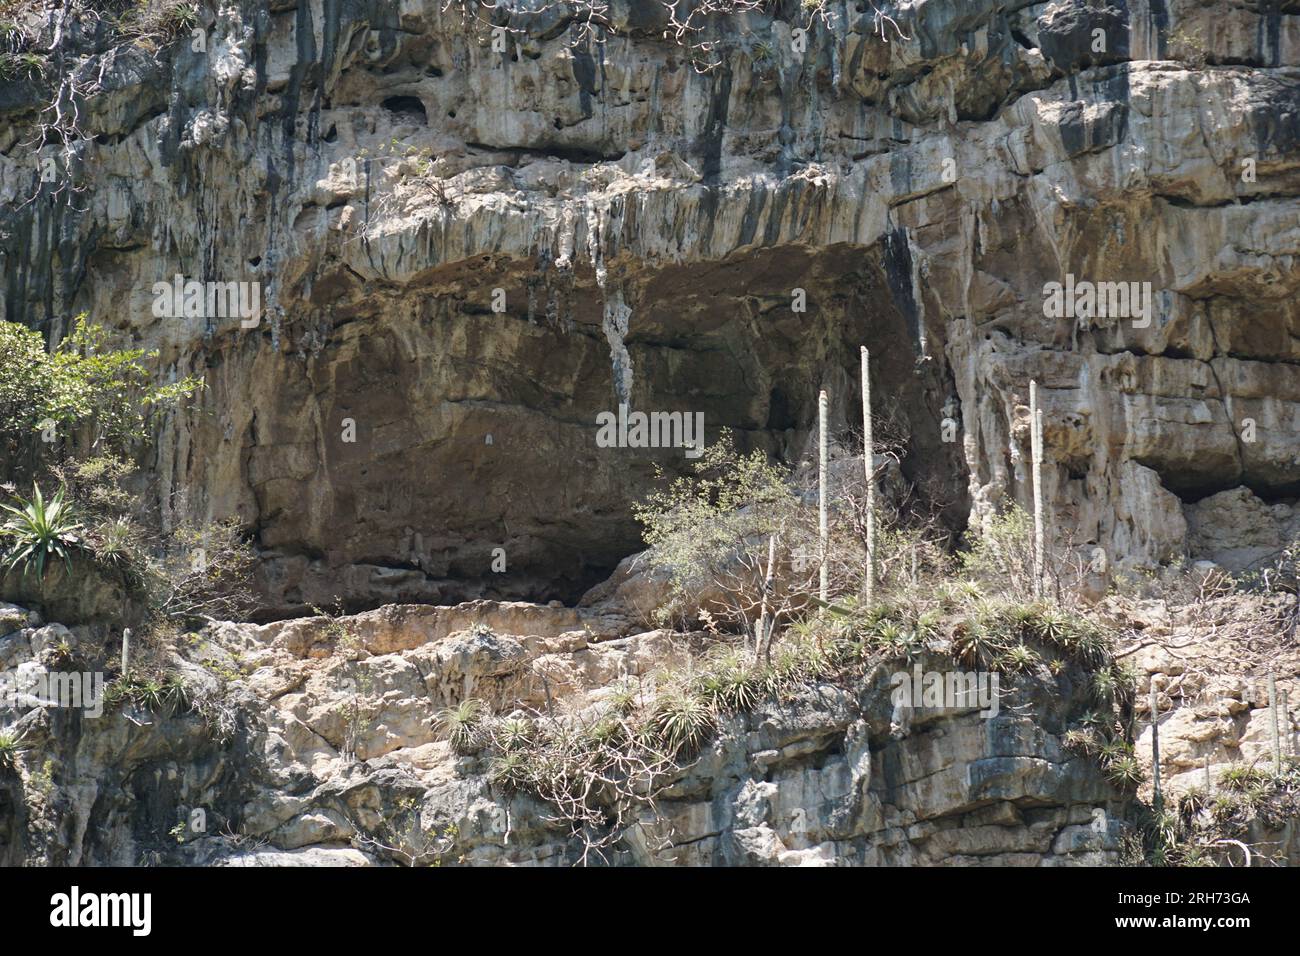 seahorse, geology, vegetation, sumidero canyon, limestone formation at chiapas mexico Stock Photo